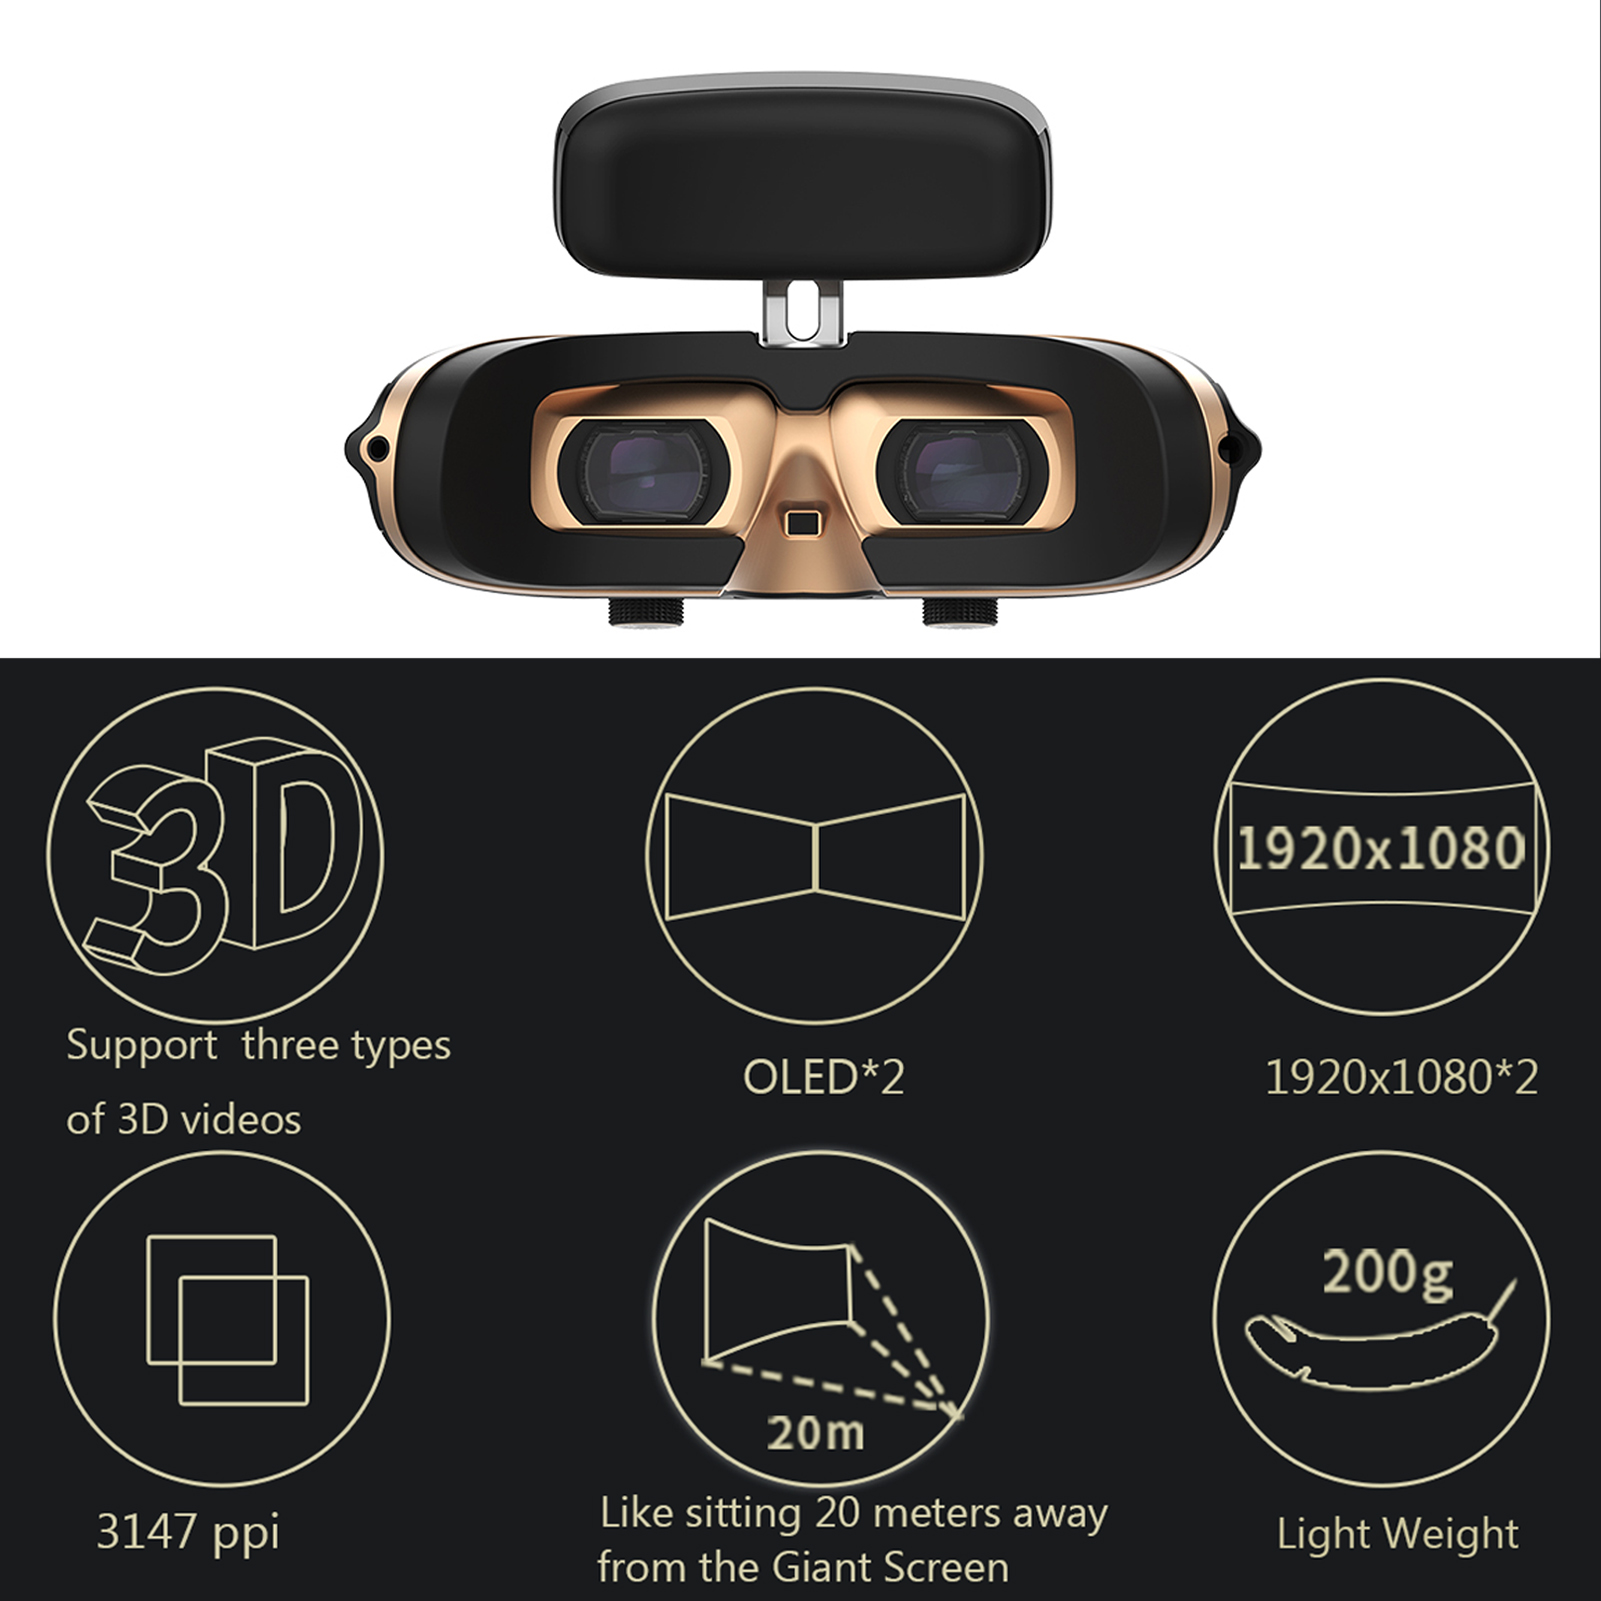  GOOVIS Pro AMOLED Display, Blu-Ray 2D / 3D Glasses HMD